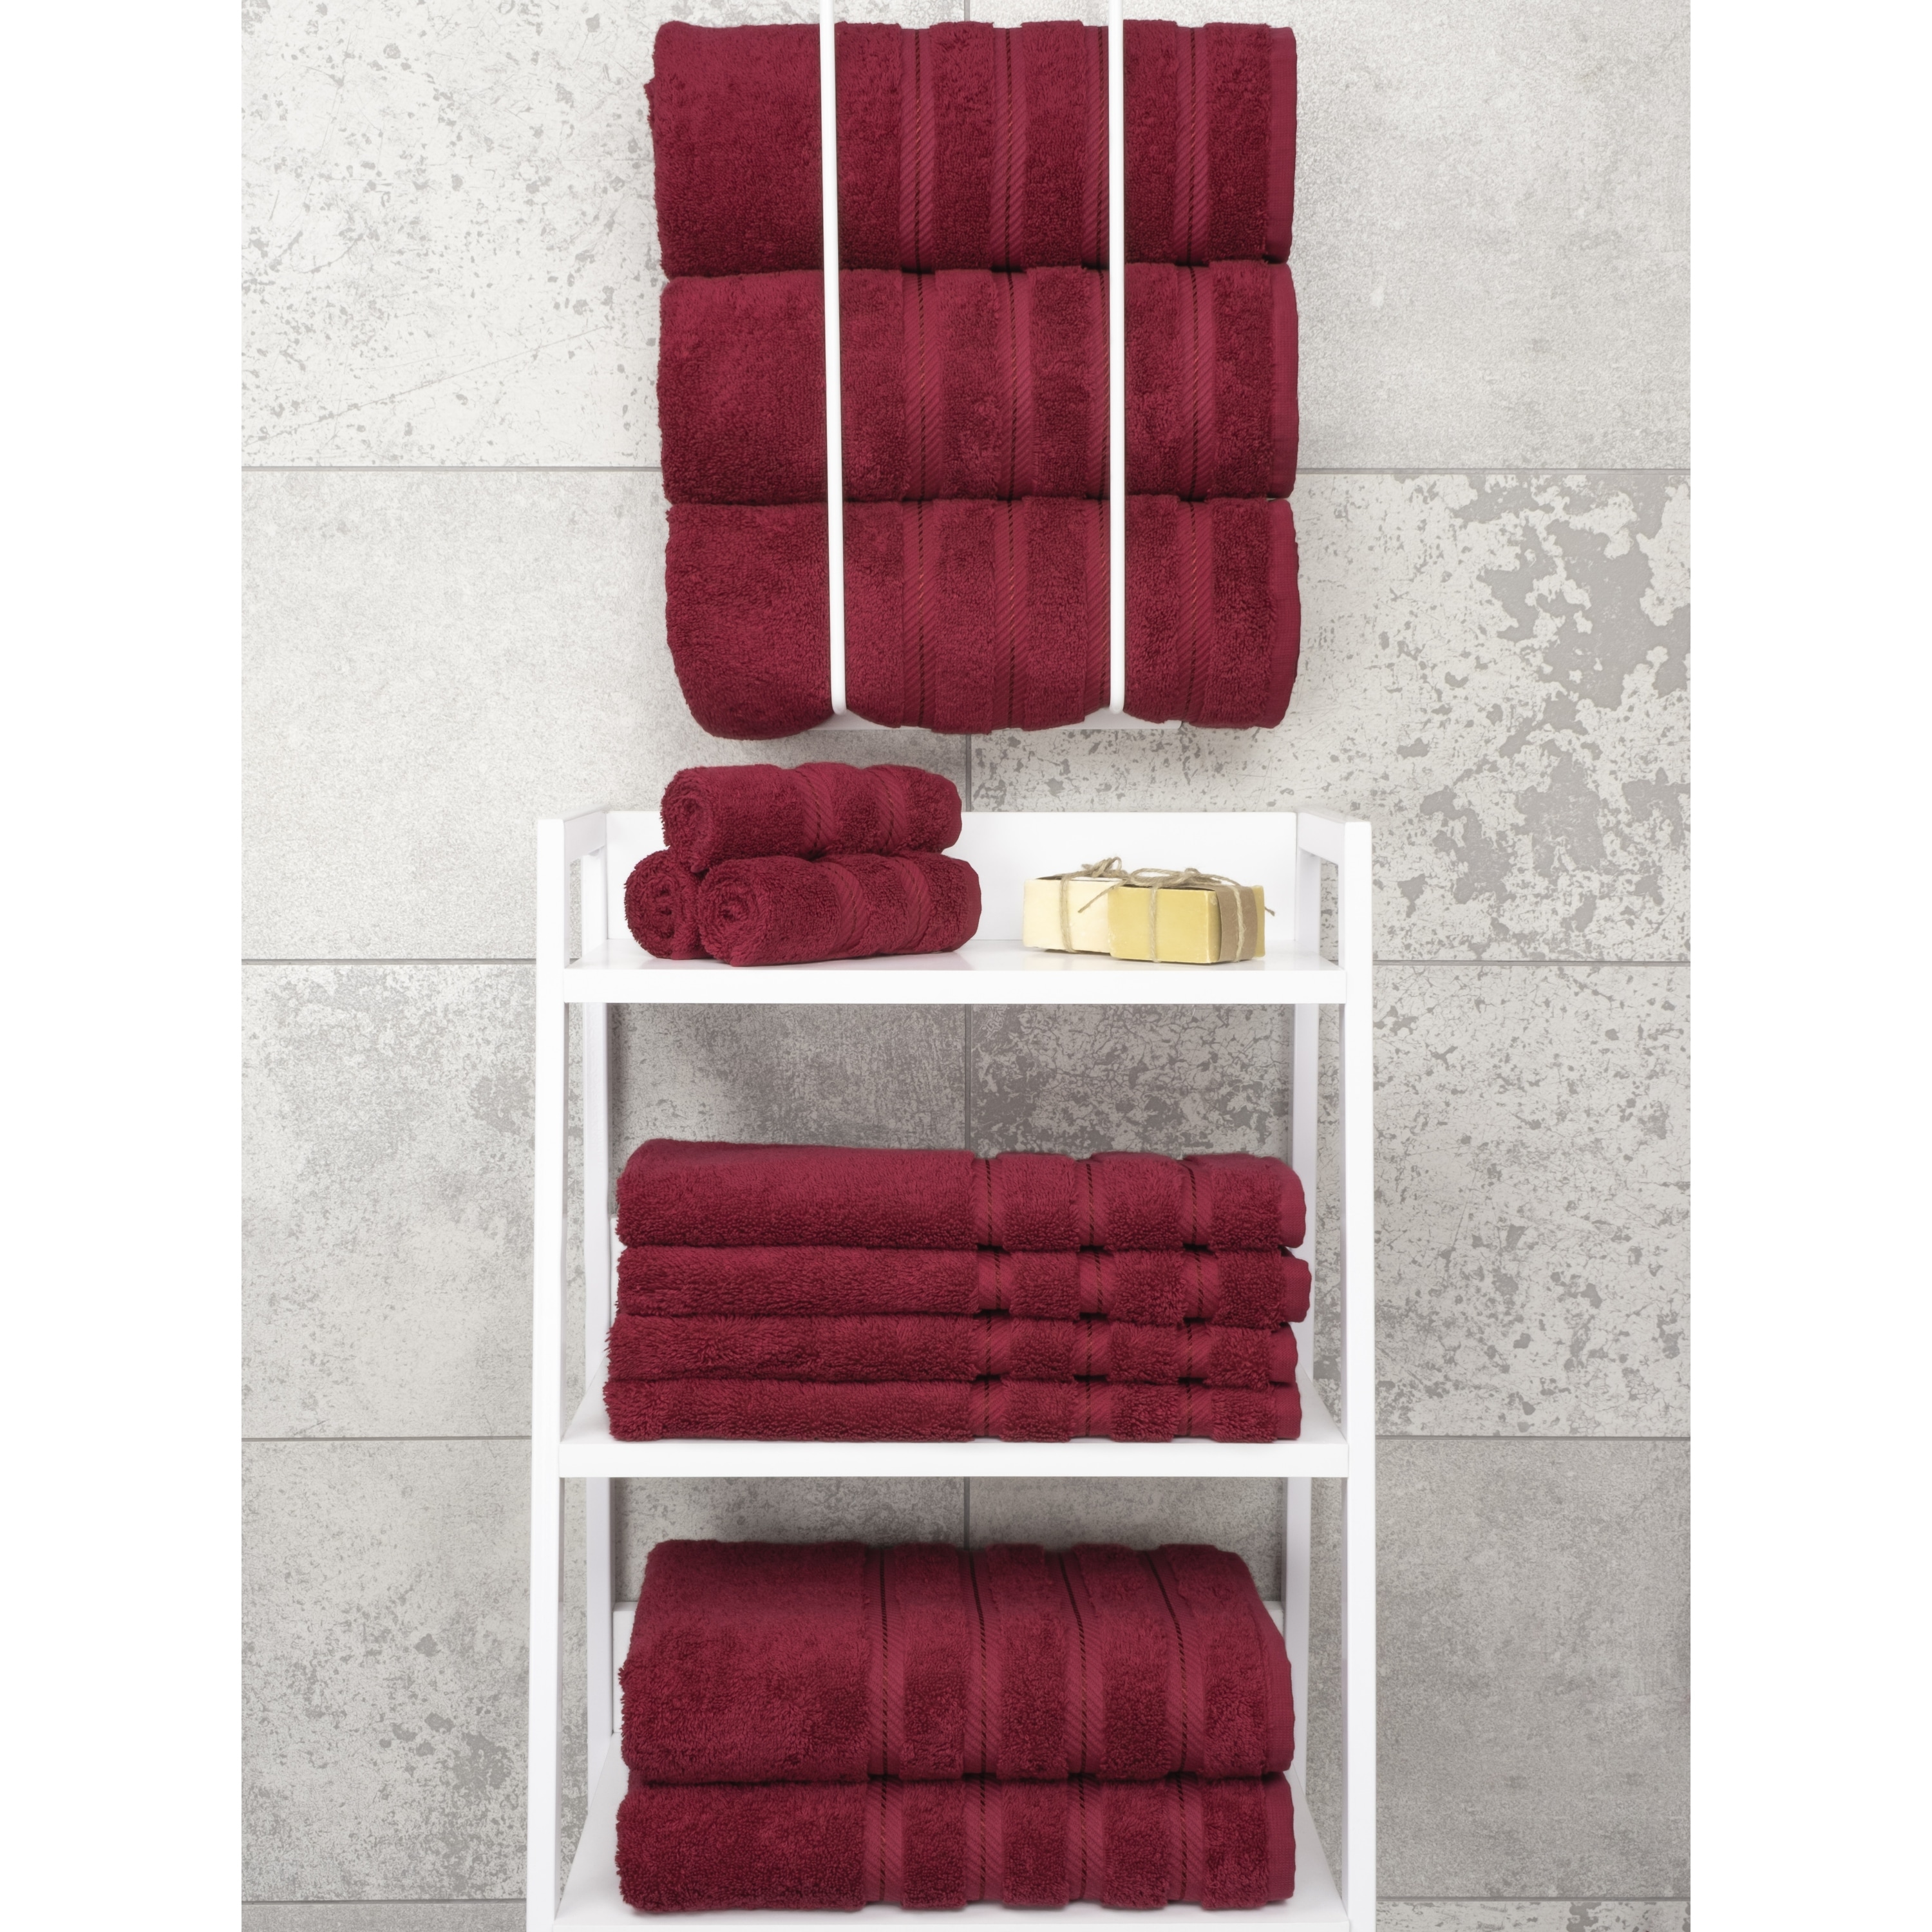 https://ak1.ostkcdn.com/images/products/is/images/direct/023cafca9506239835b8339b9f447e9cb6b3f0e8/American-Soft-Linen-Turkish-Cotton-4-Piece-Bath-Towel-Set.jpg